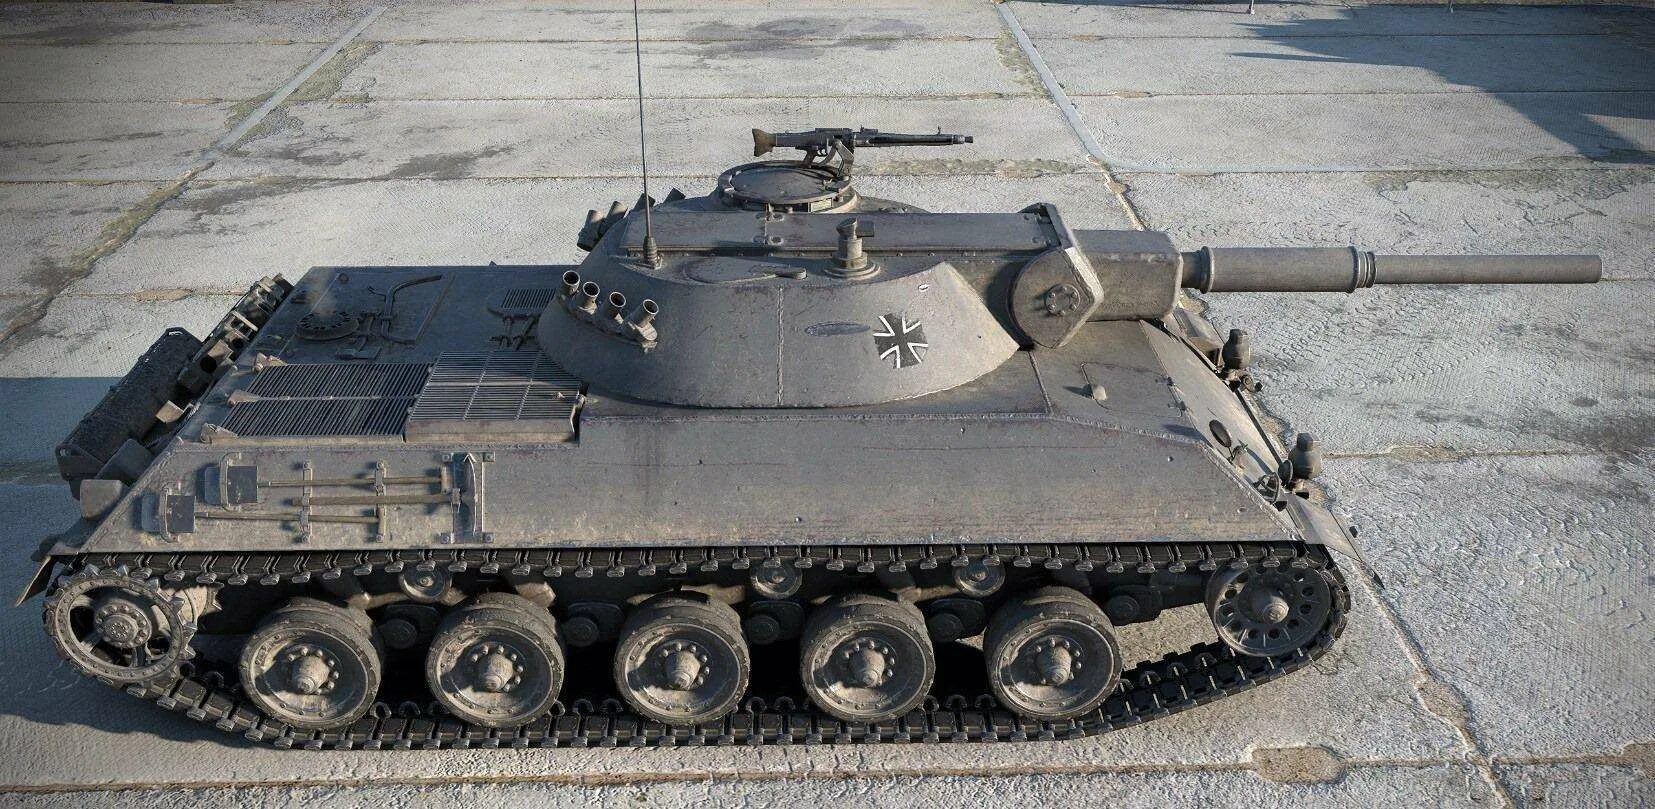 Какие танки купить 10 уровня. Рейнметалл Панцерваген. Rheinmetall Panzerwagen танк. ЛТ Германии 10 уровня. ЛТ 10 лвл Германия.